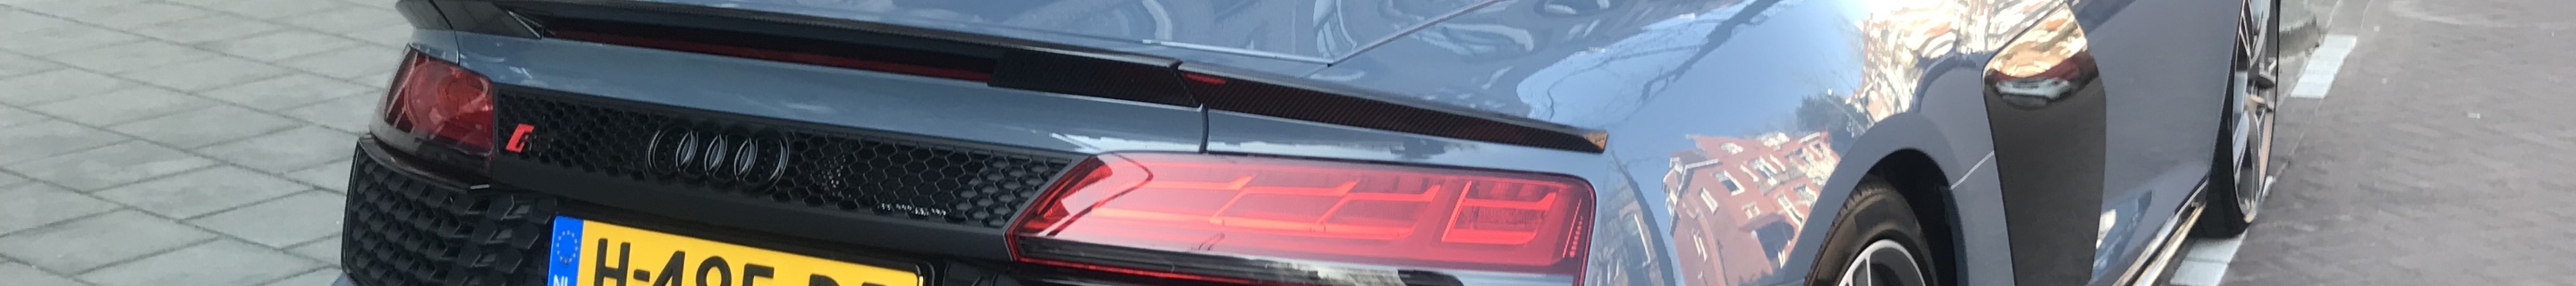 Audi R8 V10 Spyder Performance 2019